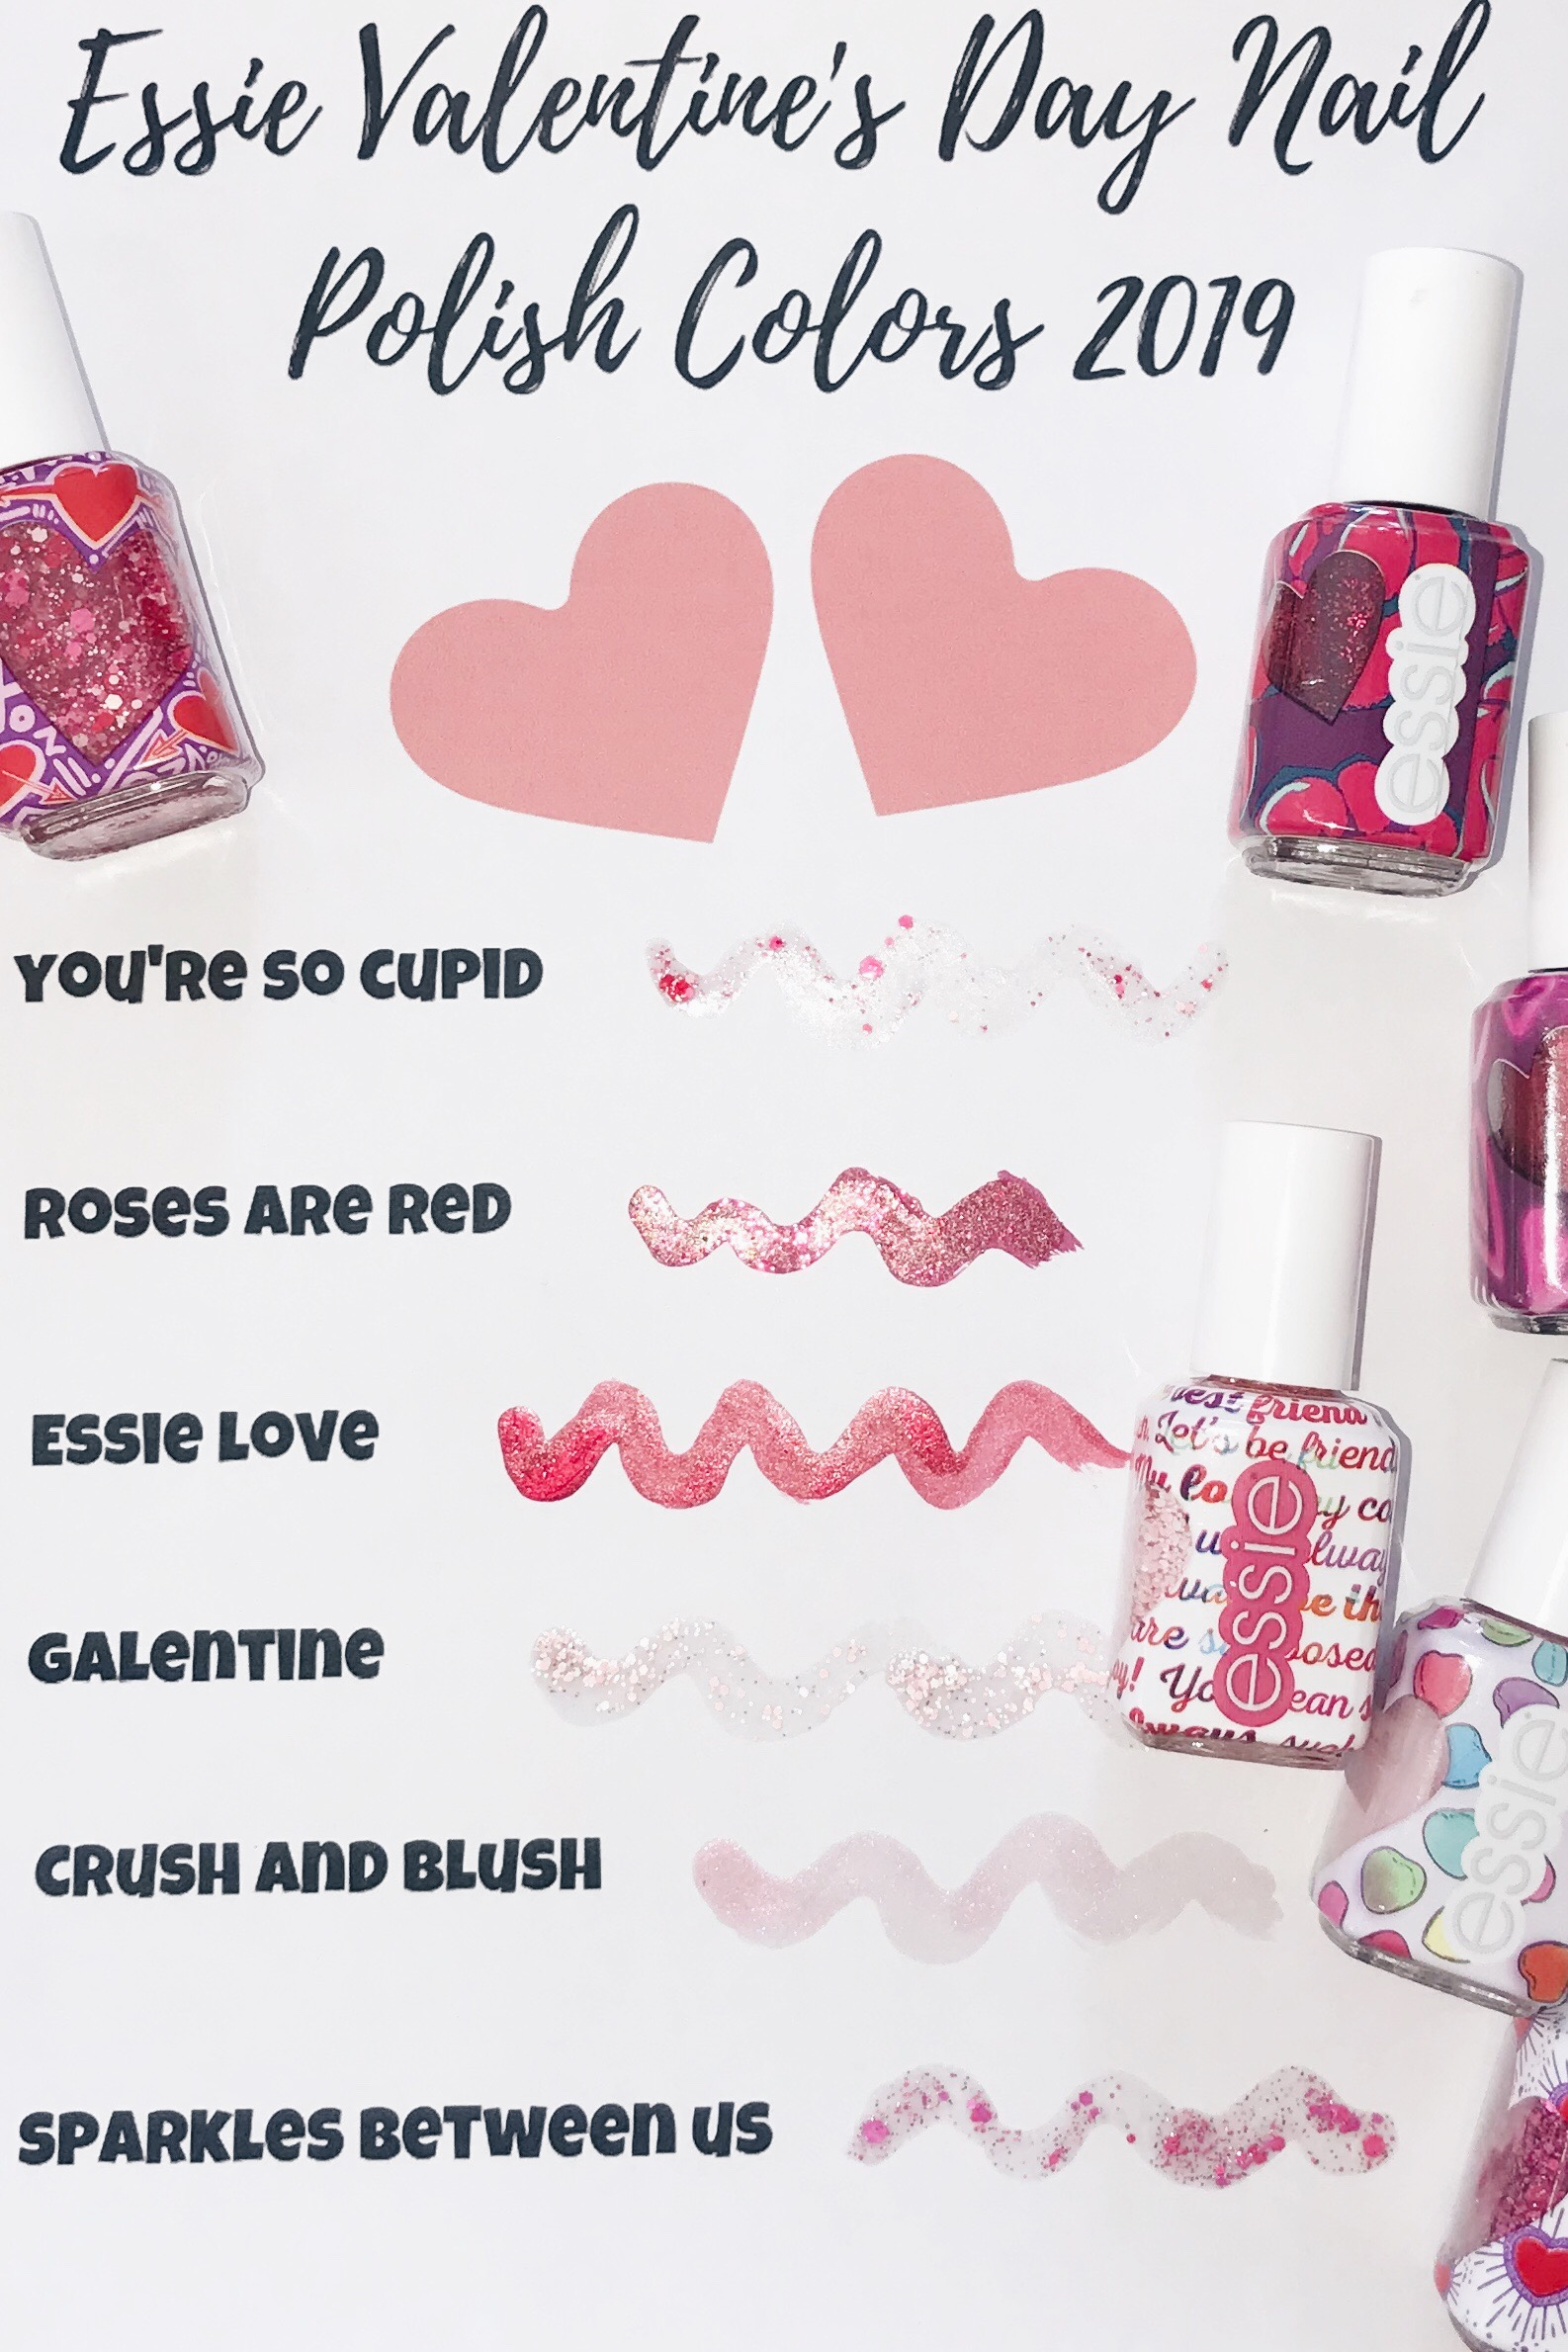 essie valentine's day manicure polish colors 2019 - pinterestingplans blog